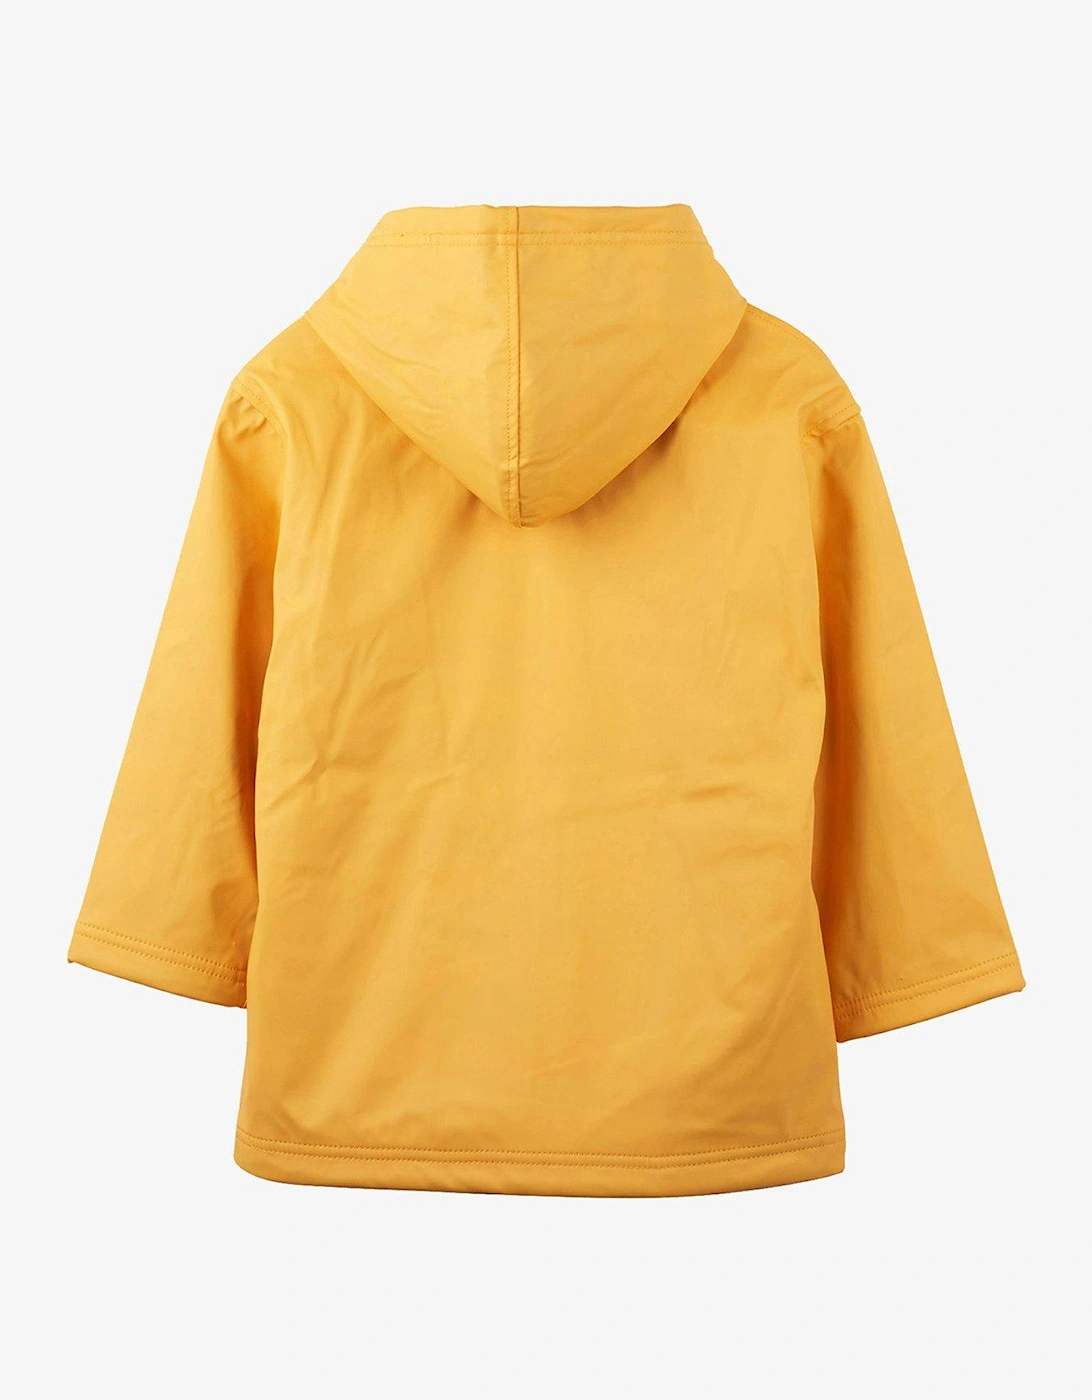 Boys Zip Up Splash Jacket - Yellow